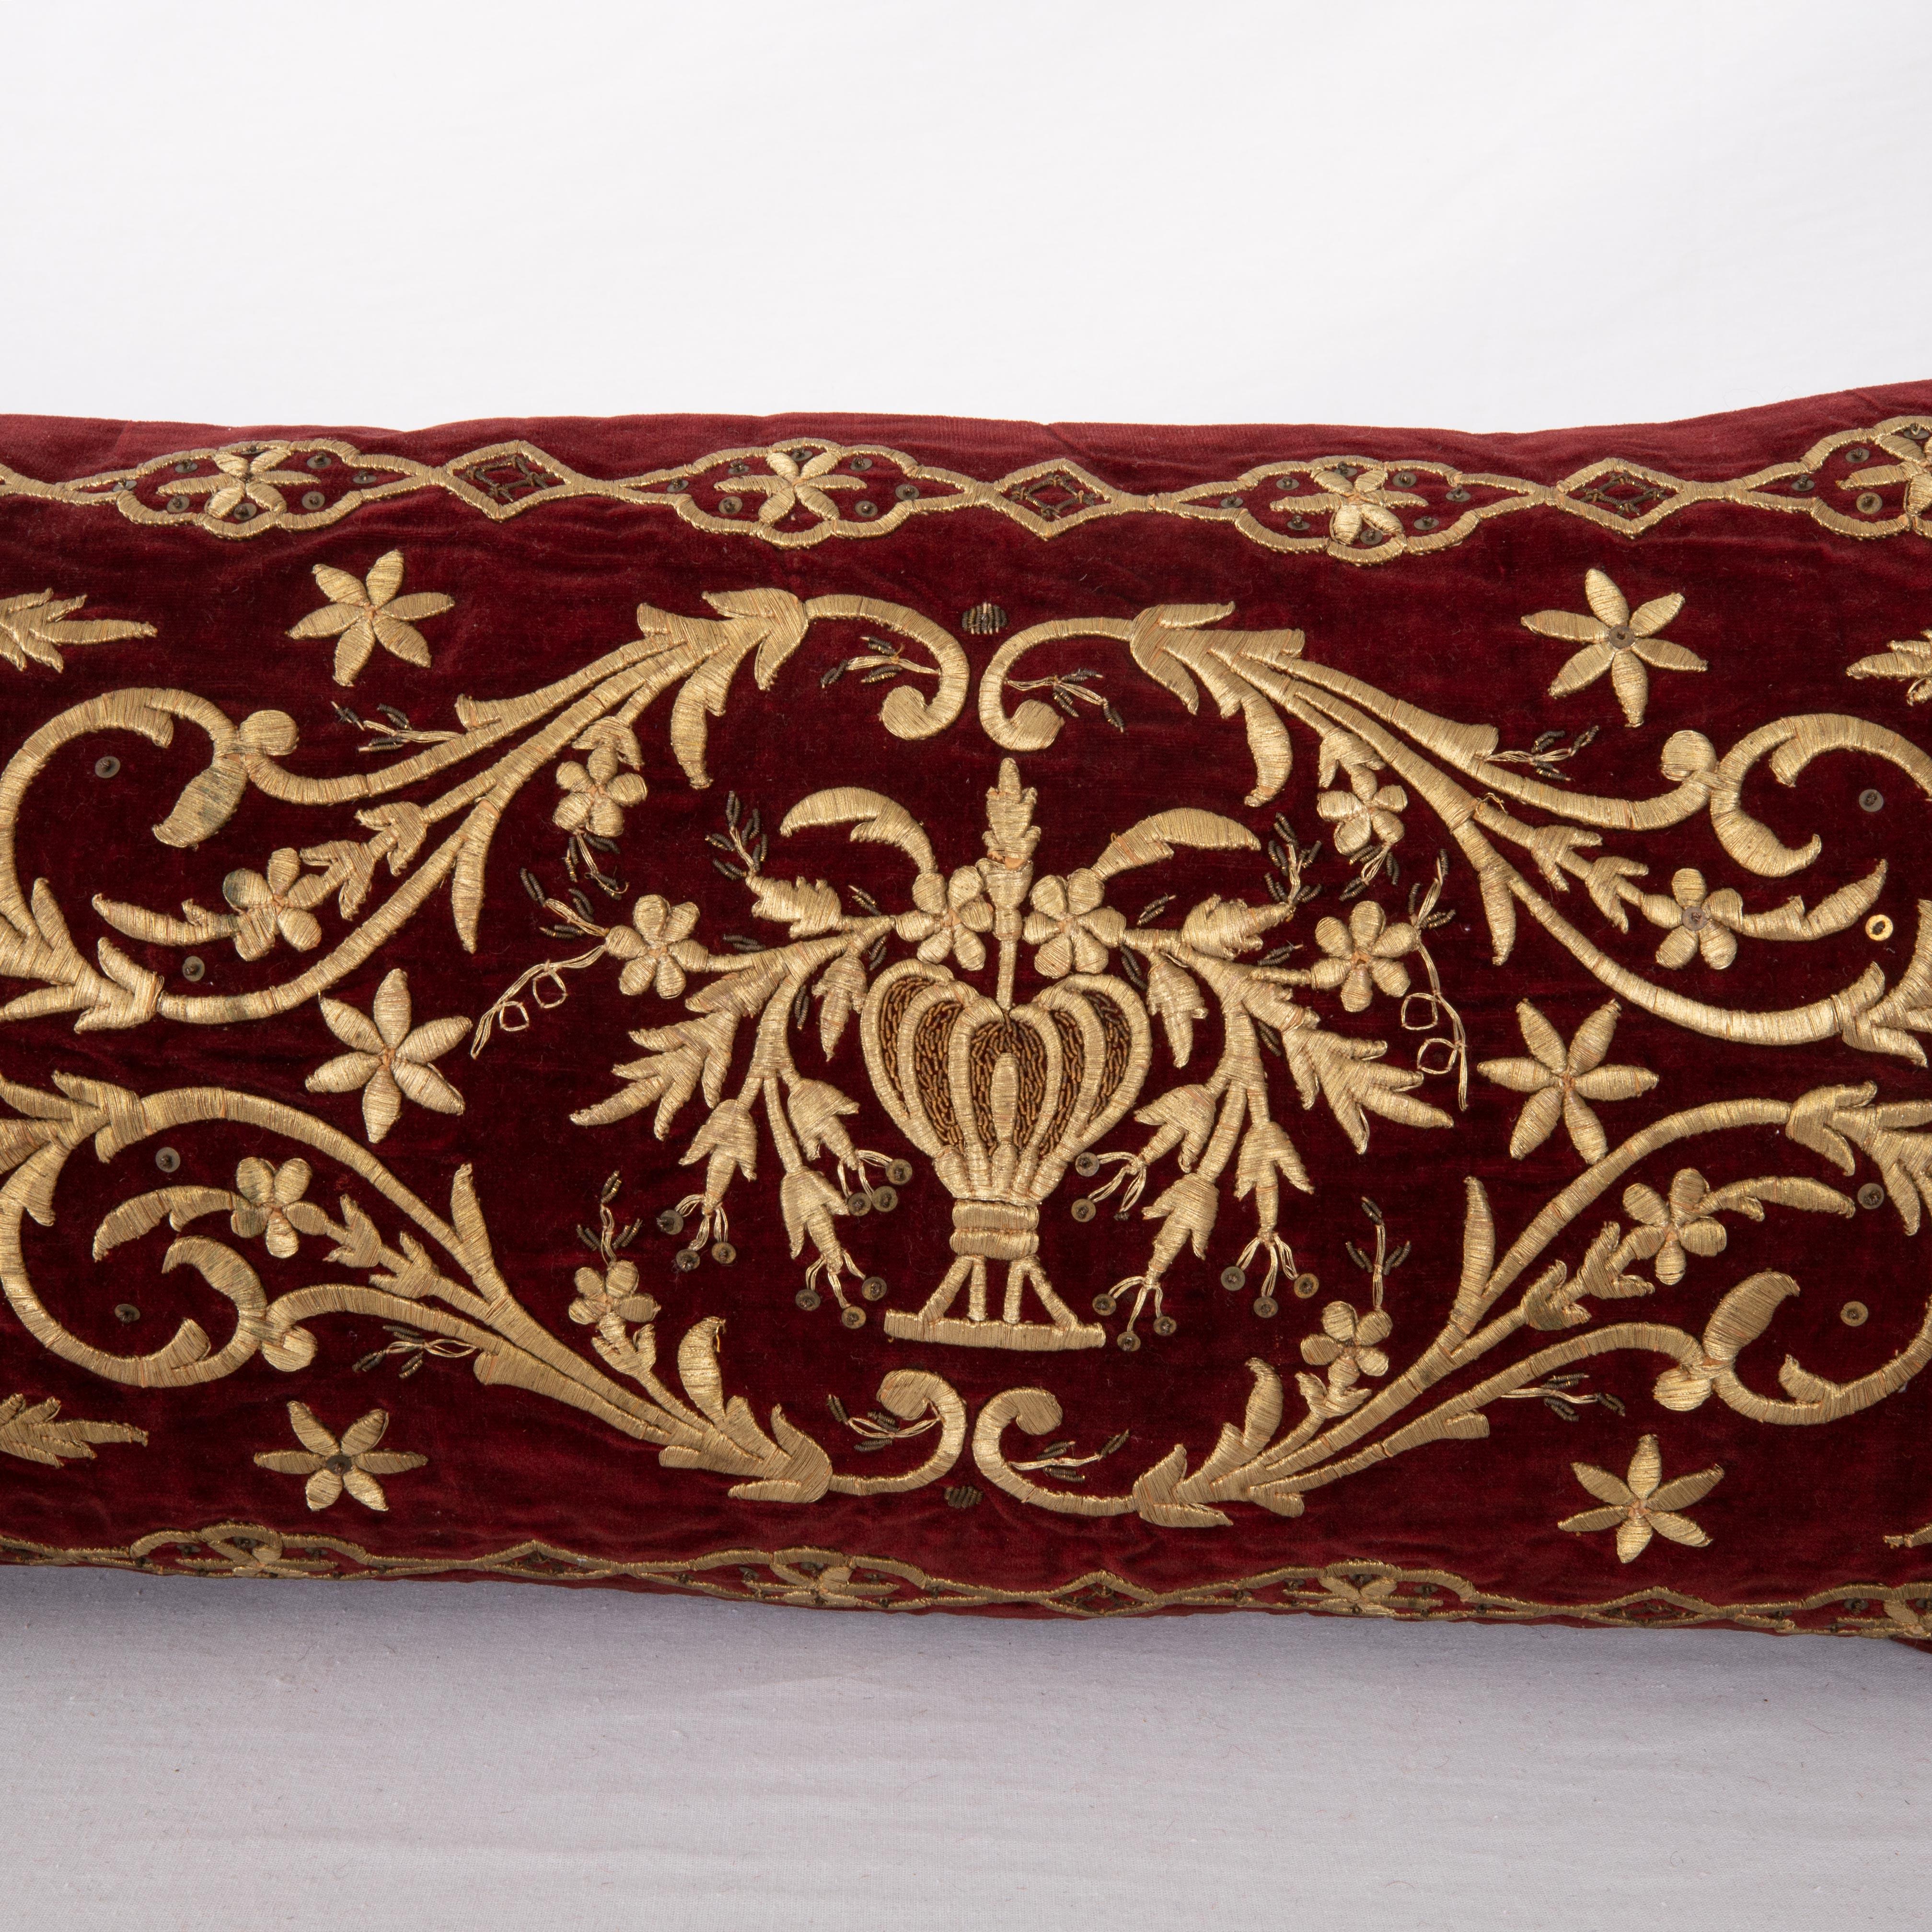 Turkish Antique Silk Velvet Ottoman Sarma Pillow Cover, Late 19th Century For Sale